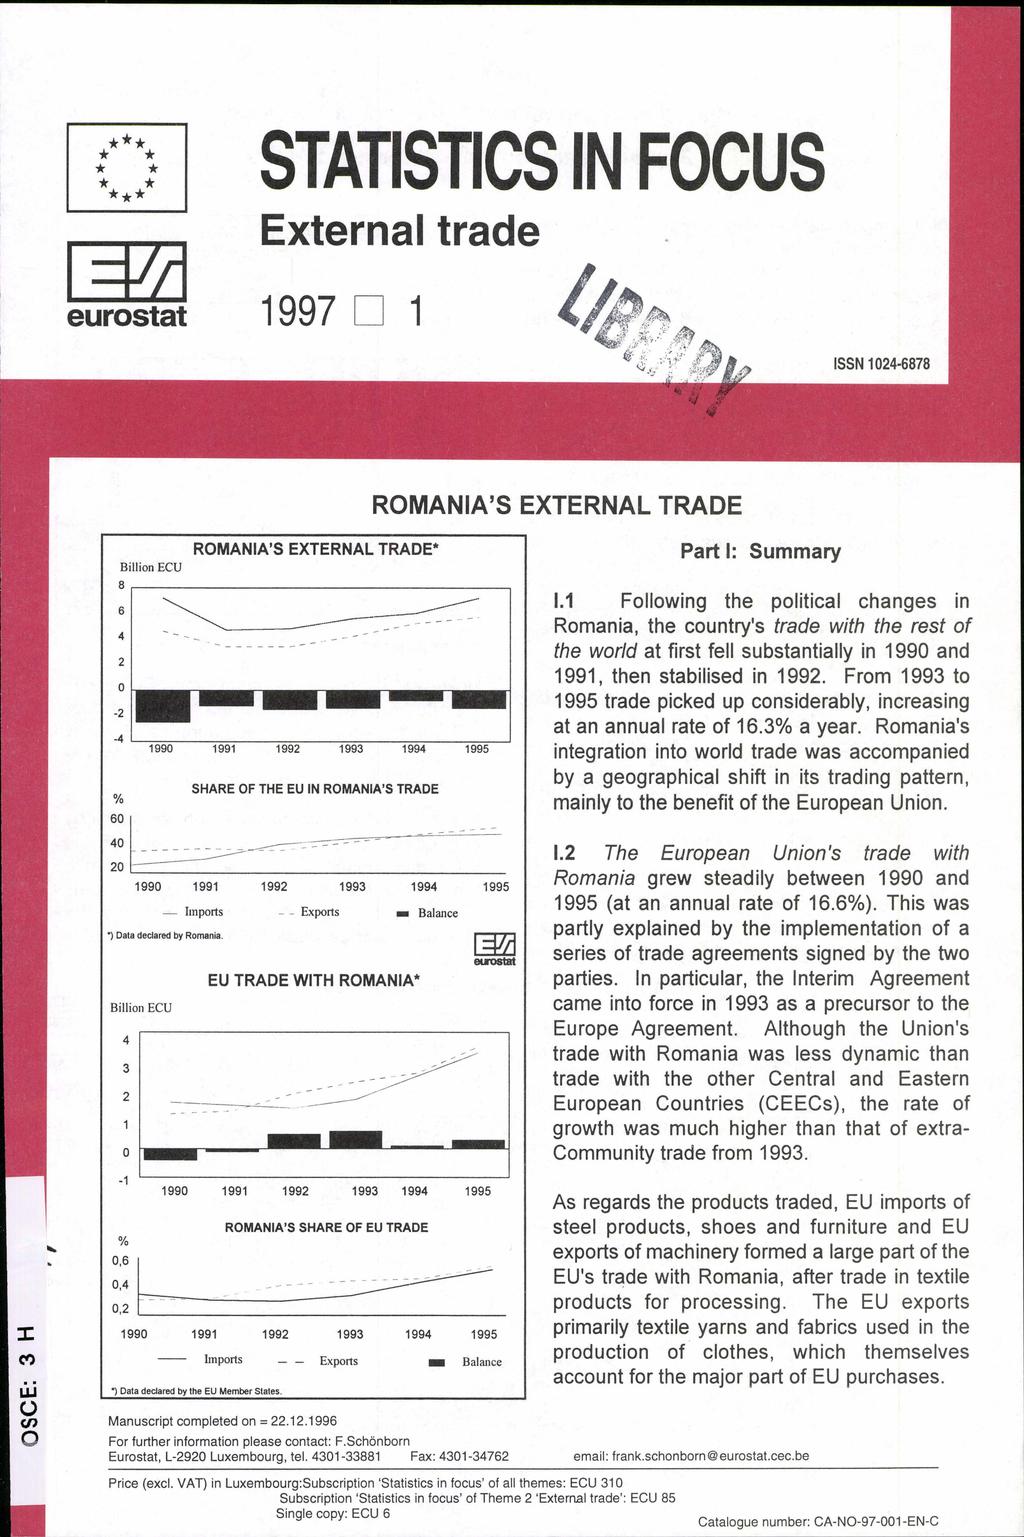 *** * * *** STATISTICS IN FOCUS External trade!l] eurostat 1997 D 1 ISSN 1024-6878 ROMANIA'S EXTERNAL TRADE ROMANIA'S EXTERNAL TRADE* BillionECU Sr-------------------.